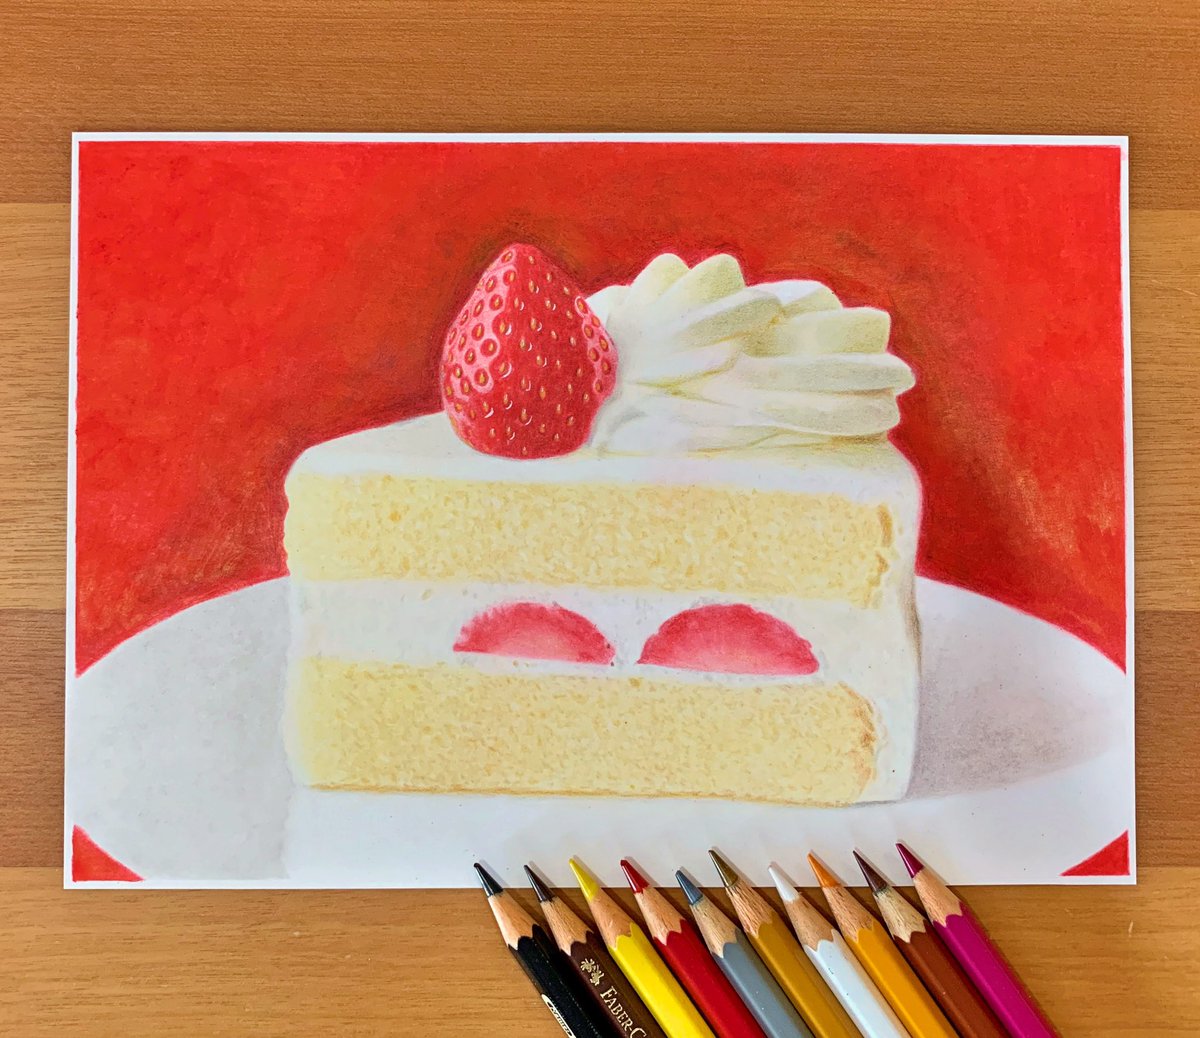 تويتر ここまる 著書 超絶リアルな色鉛筆画のテクニック 予約受付中 على تويتر ショートケーキを色鉛筆とパンパステルで描きました 色鉛筆画 ショートケーキ ケーキ 美味しそうならrt T Co Fzgc7e05pk